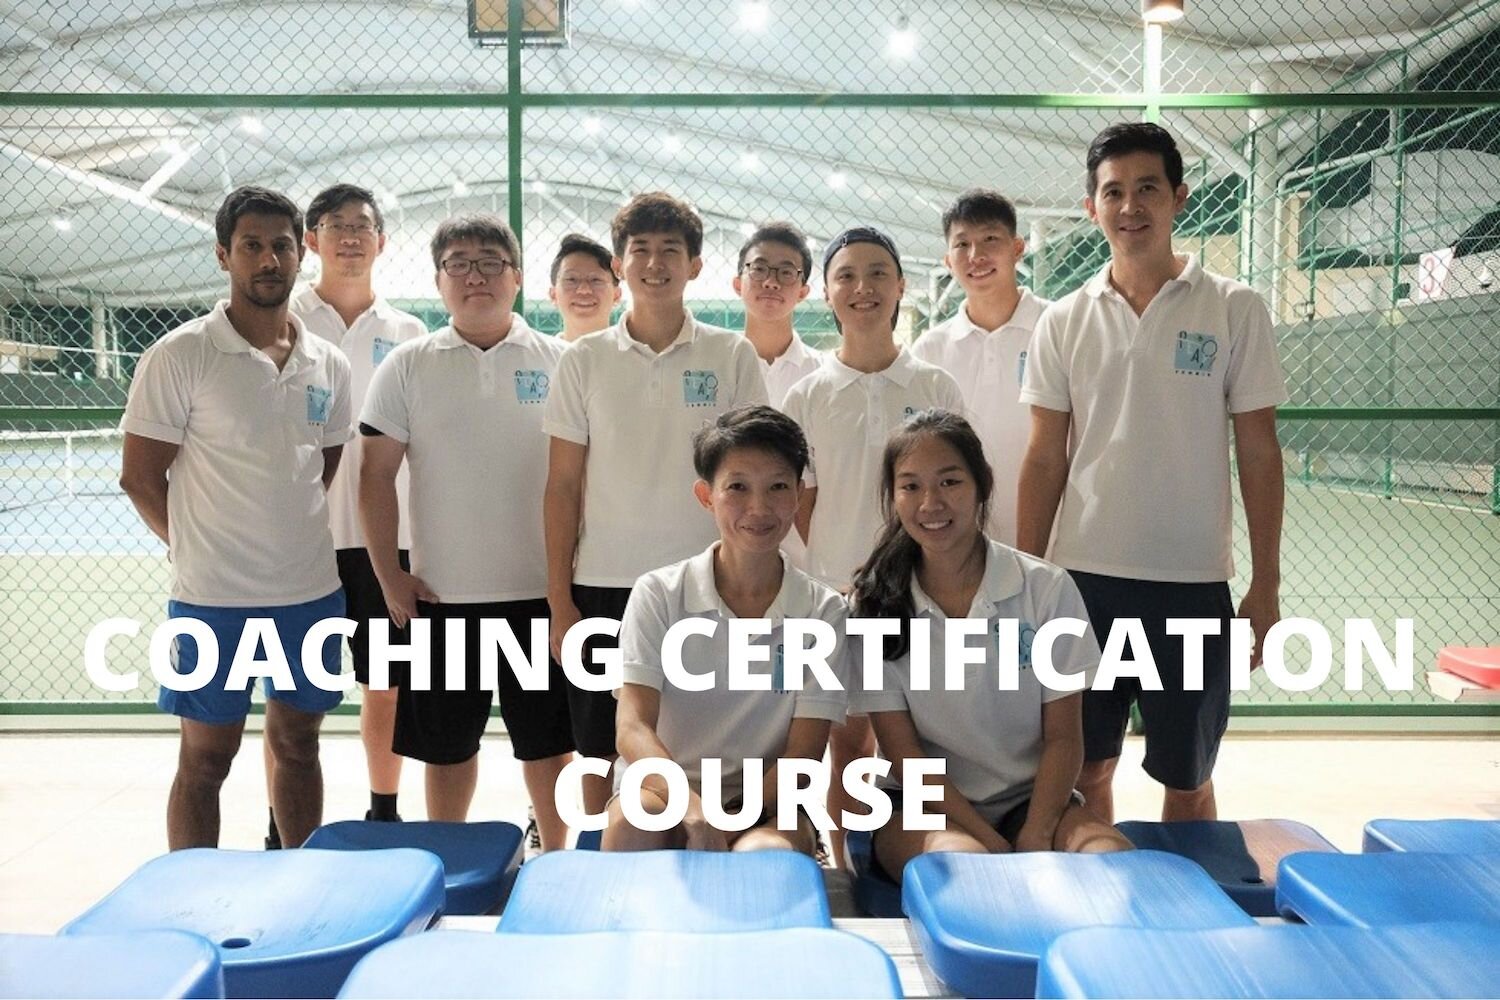 Tennis Coaching Certification Course (Copy)